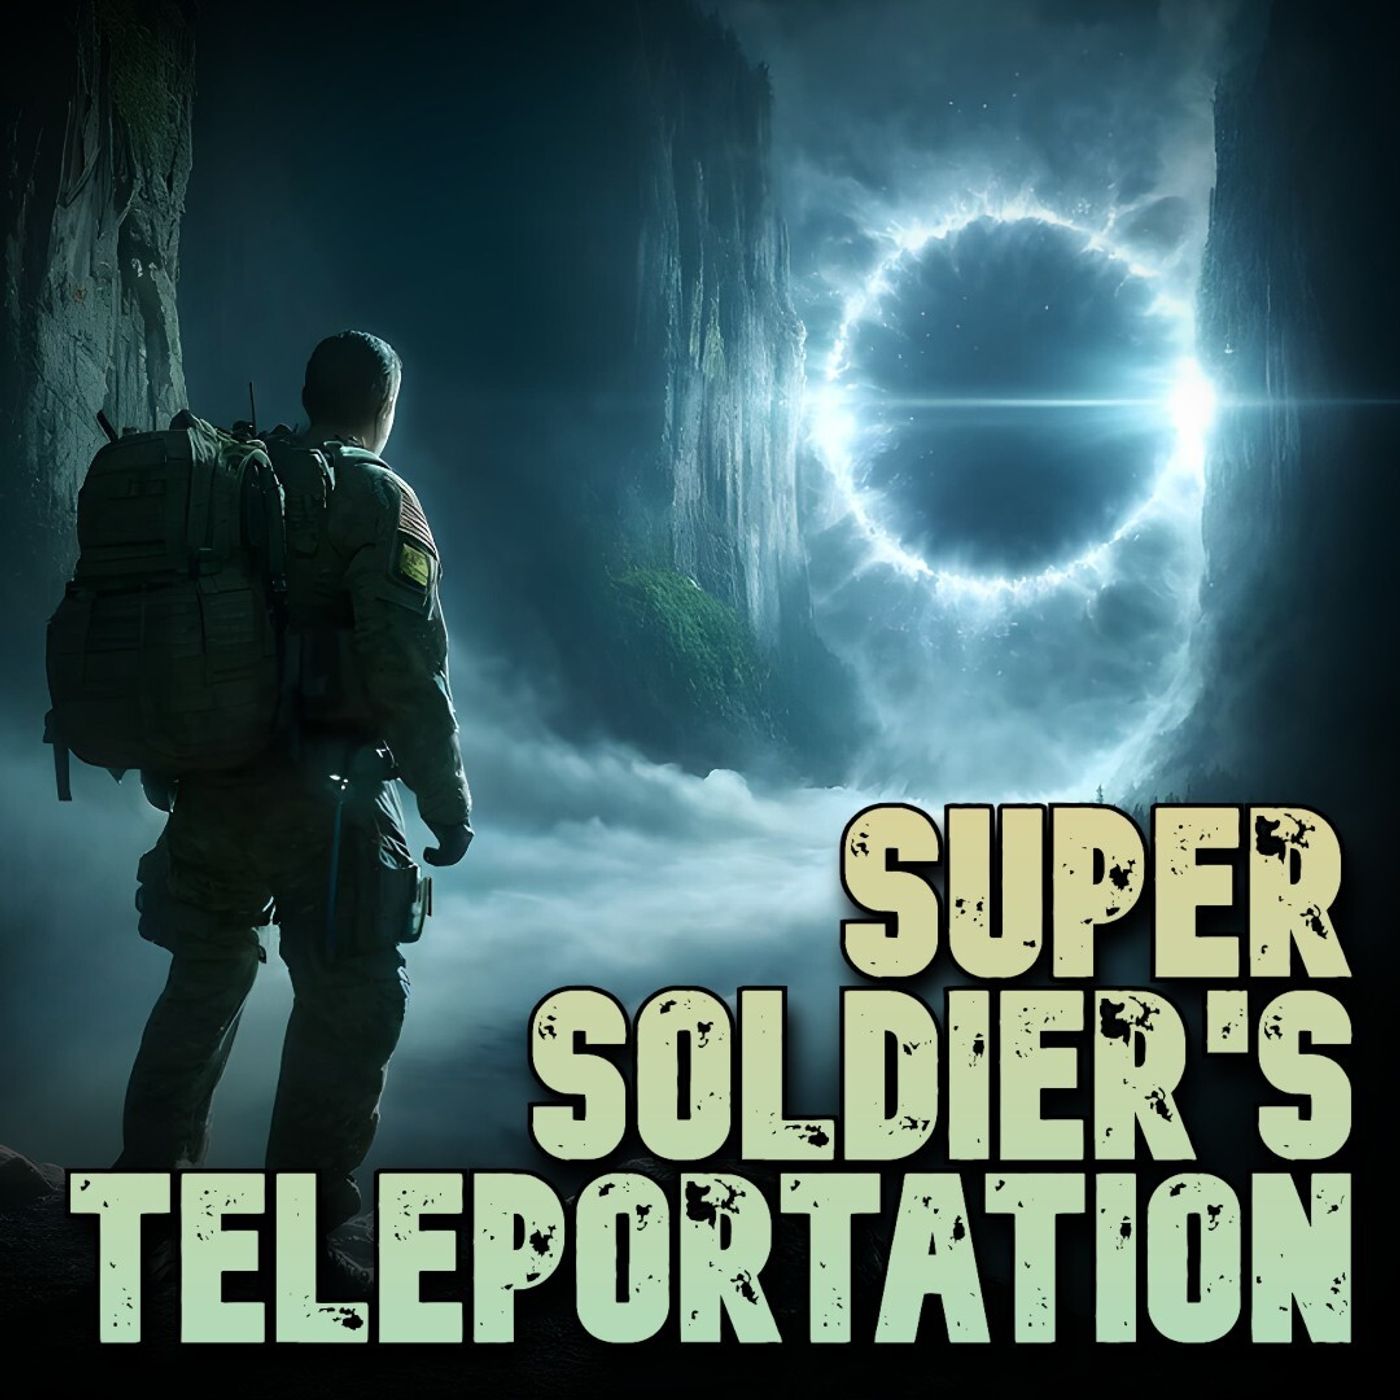 653: Super Soldier's Teleportation